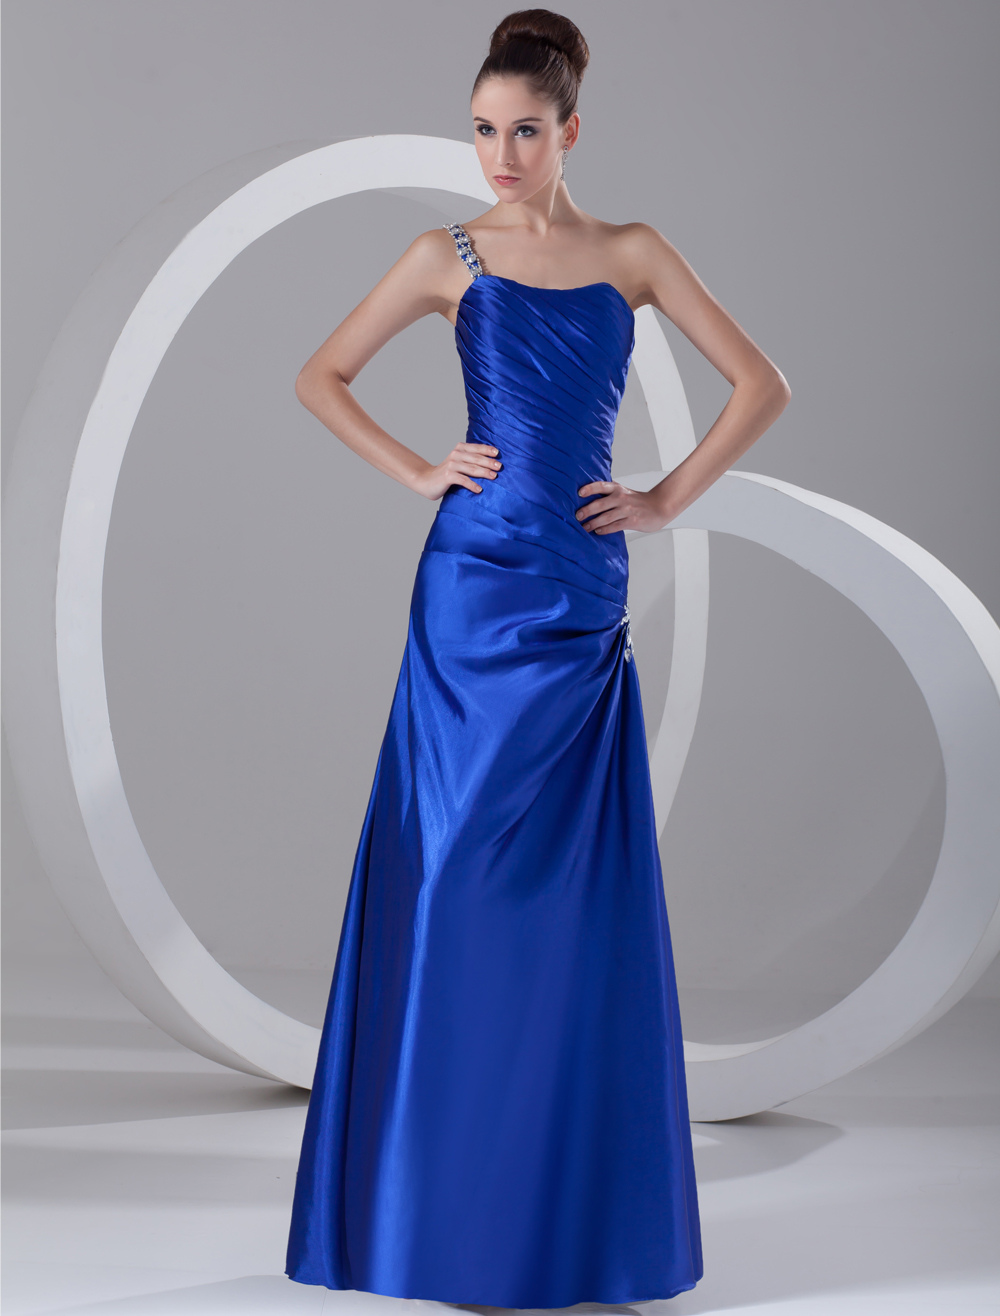 Chic Royal Blue Rhinestone One-Shoulder Women's Evening Dress - Milanoo.com